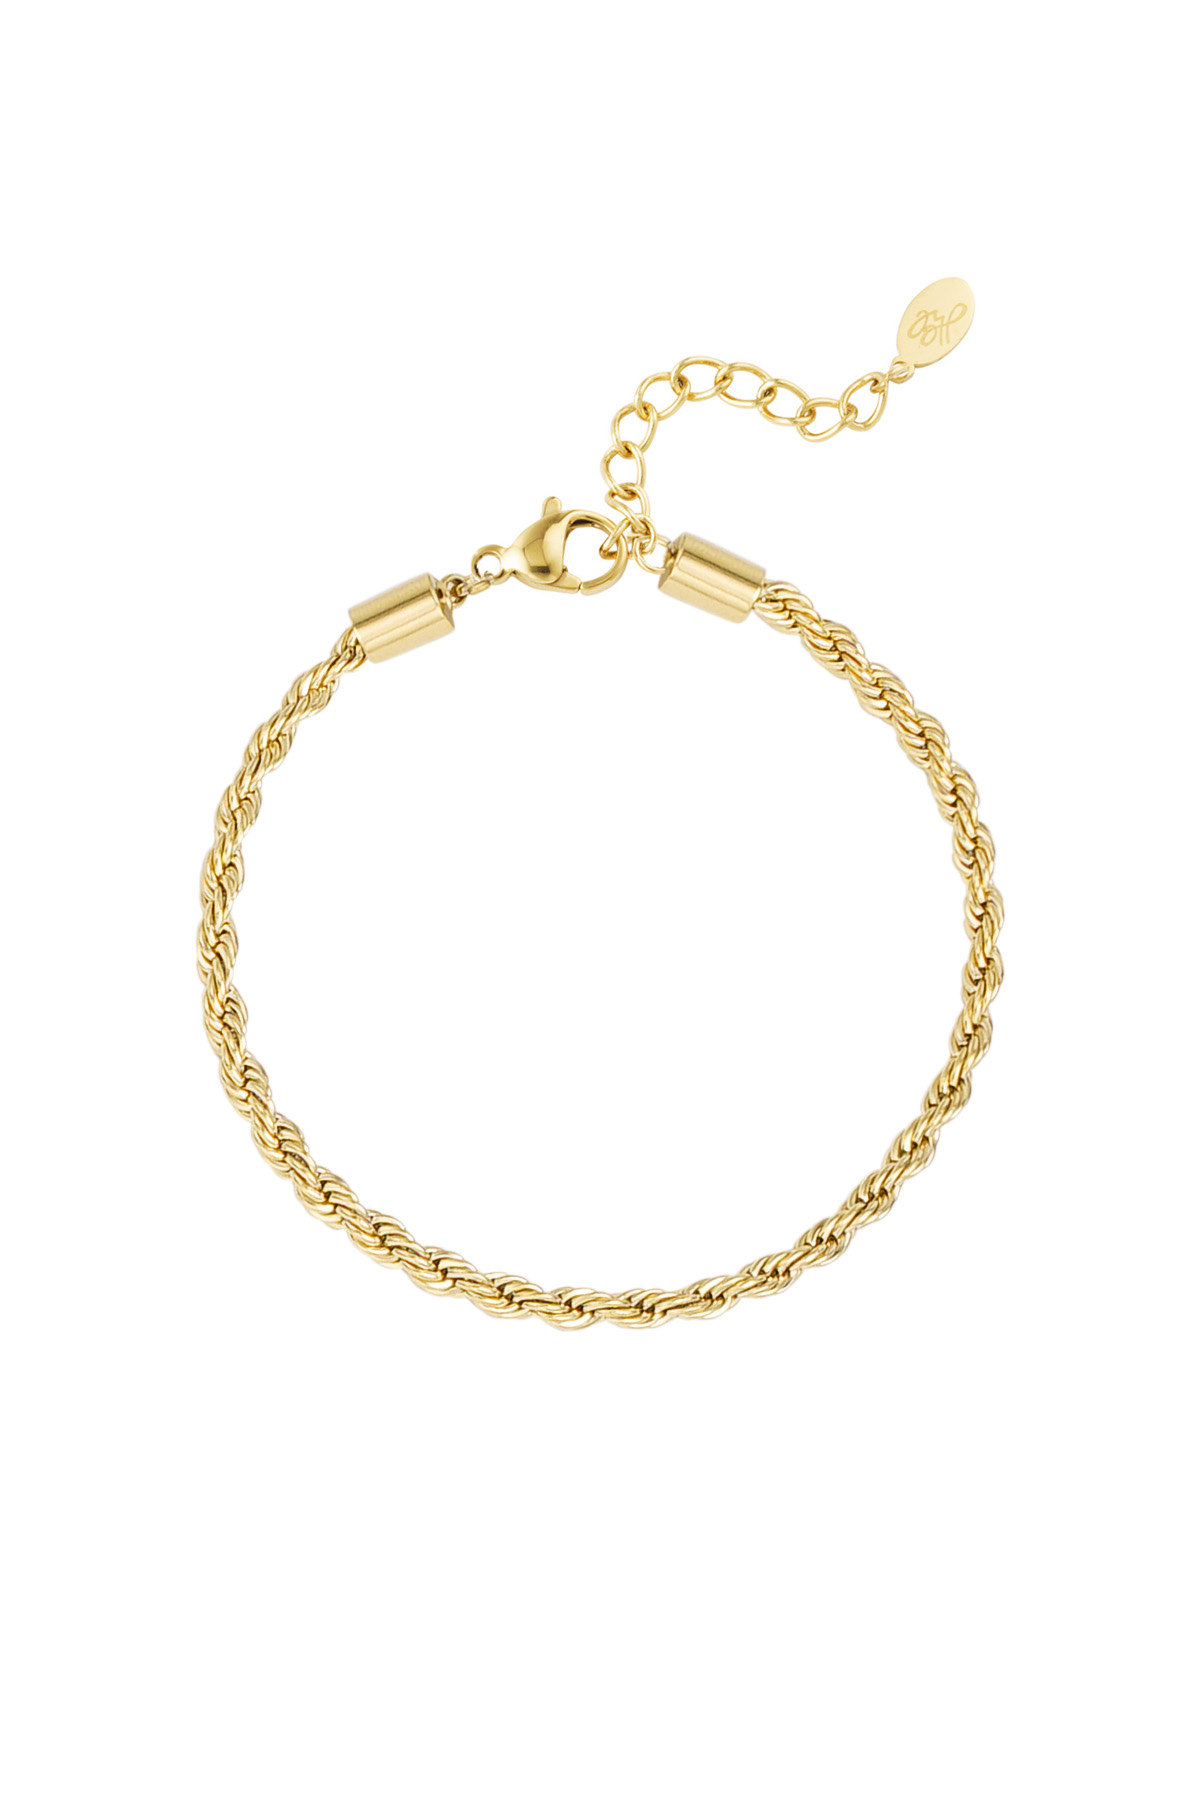 Bracelet turned jasseron - gold-3.0MM h5 